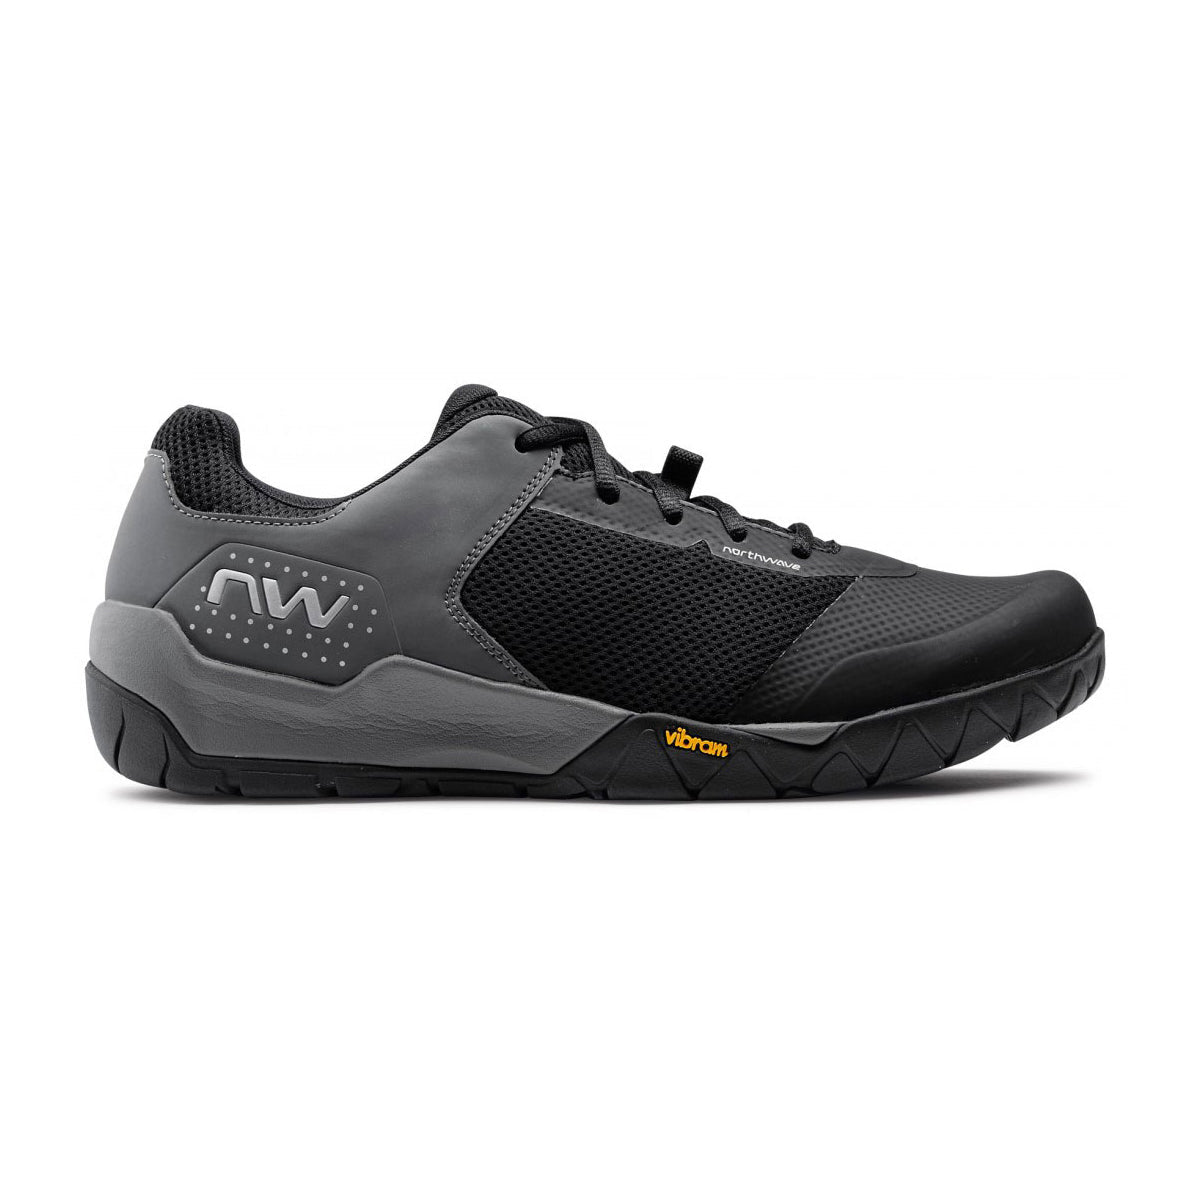 Northwave Multicross Shoes - EU 46 - Black